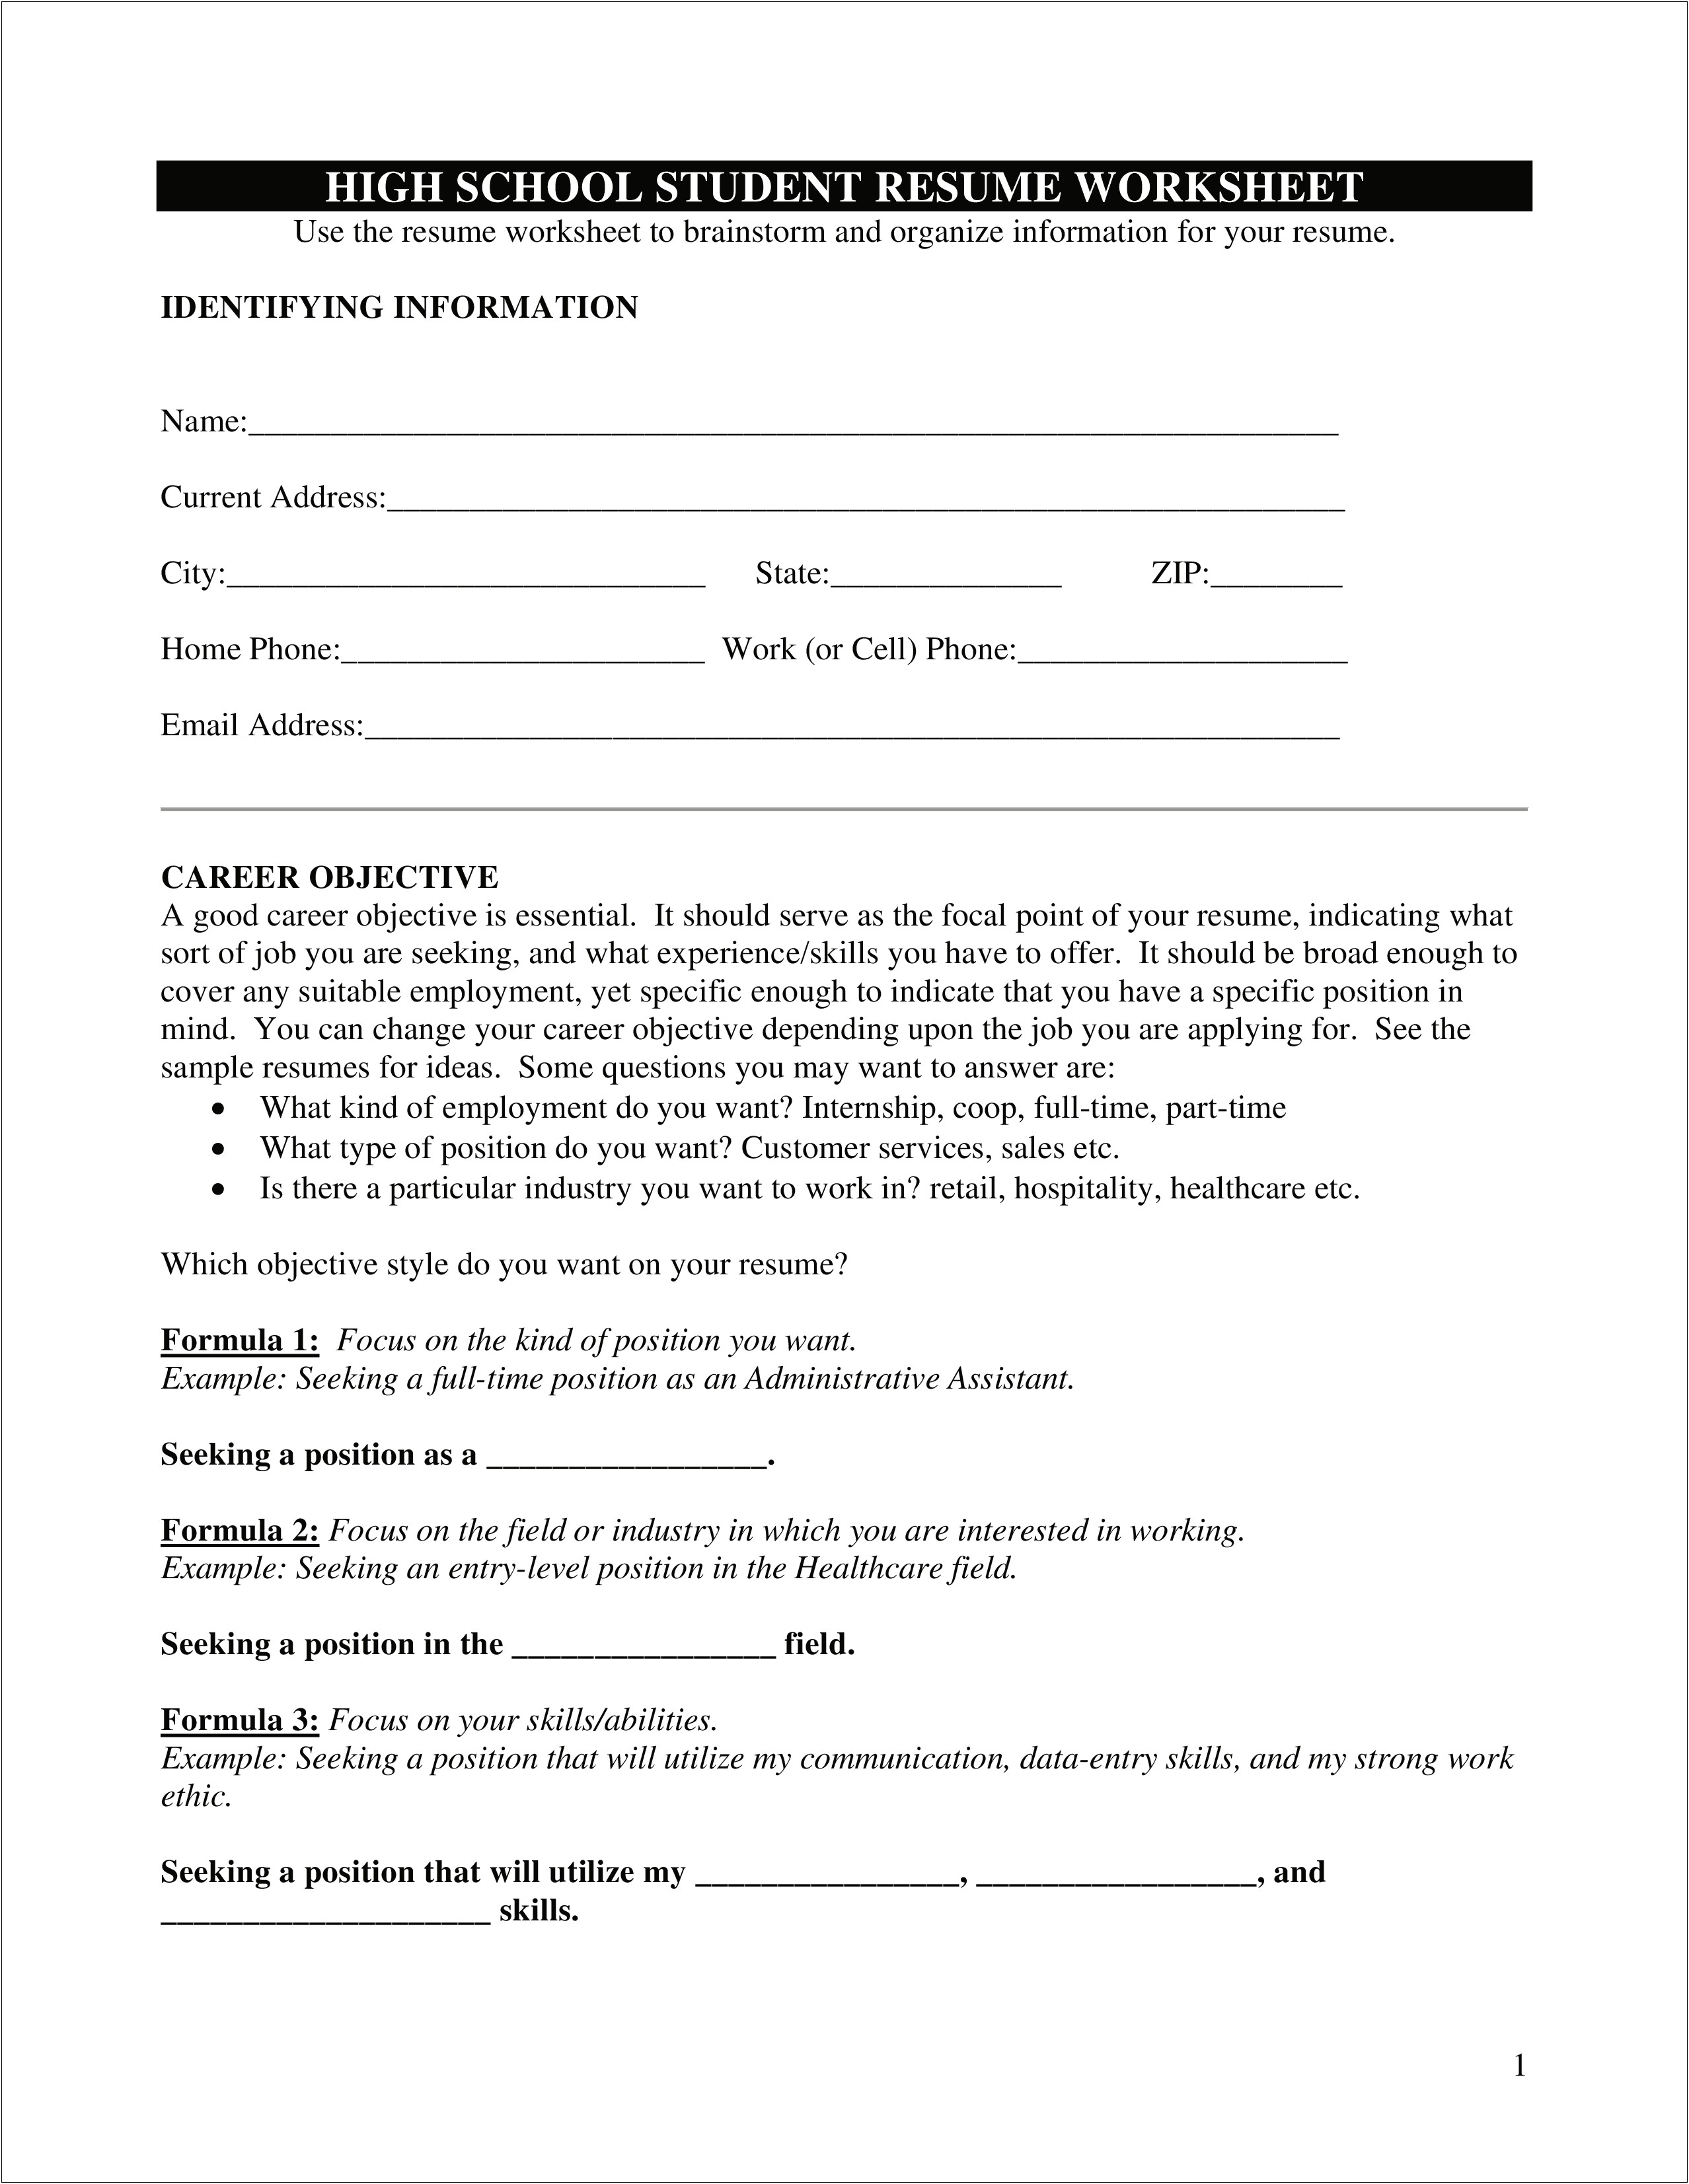 Resume Worksheet For High School Students Entry Level